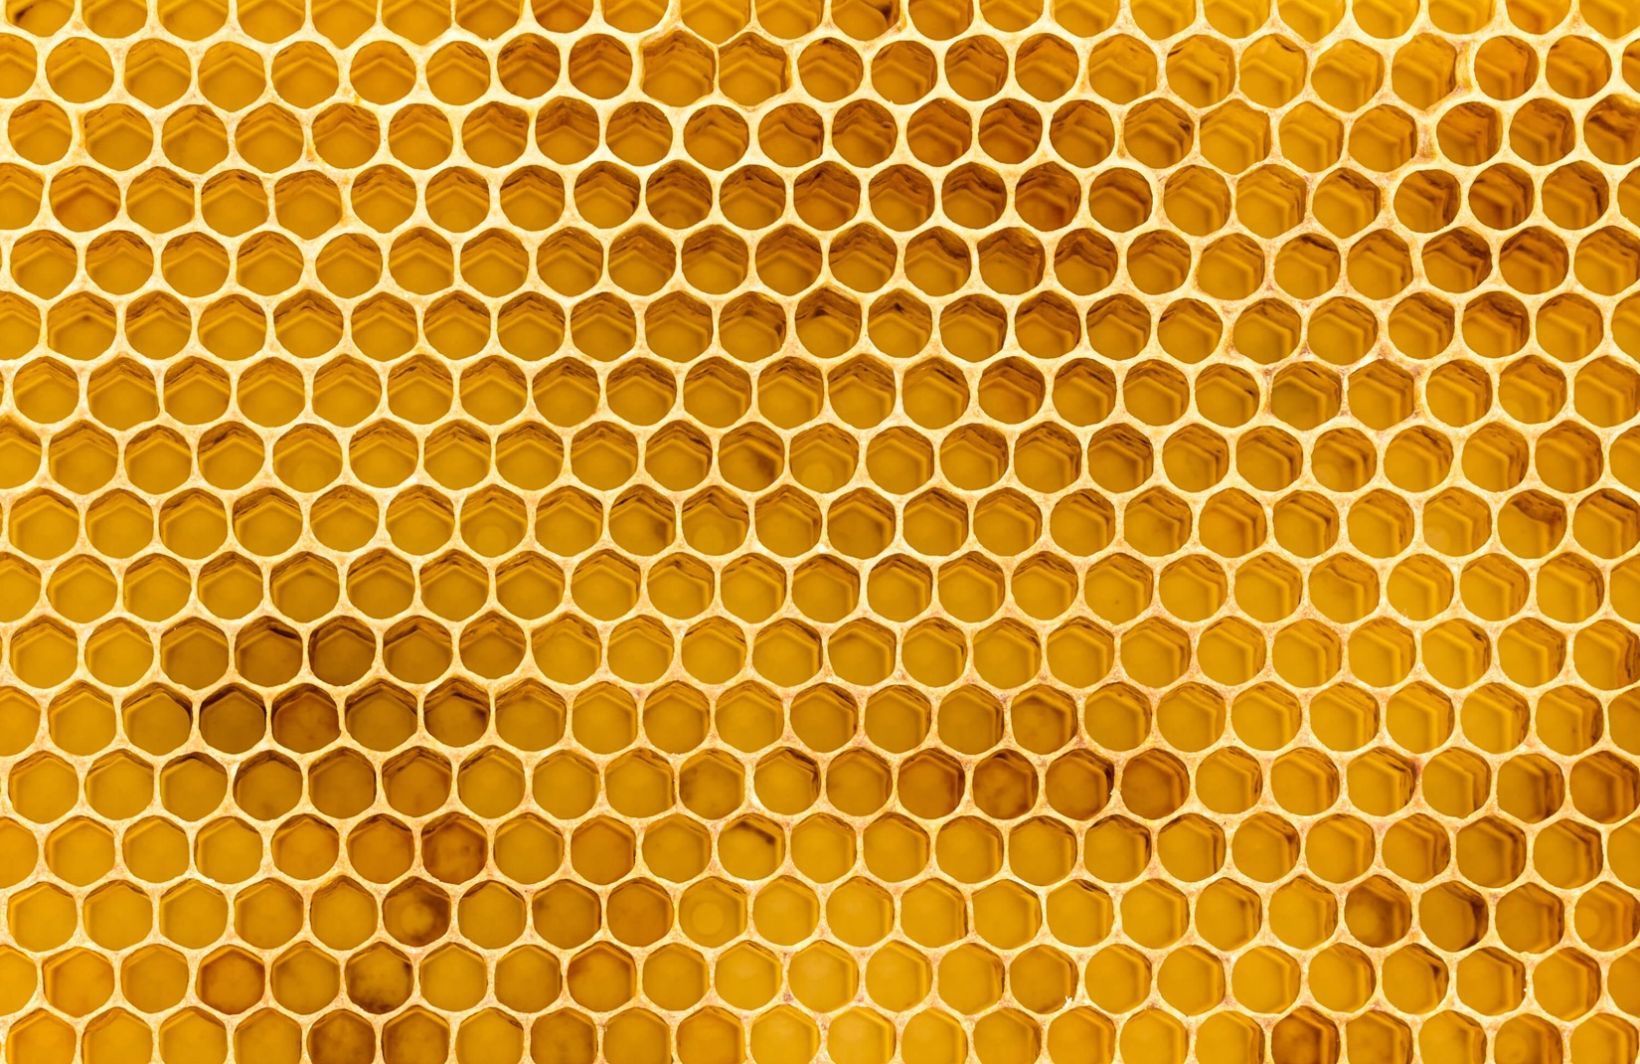 Honeycomb Texture Wallpaper Mural Plain Shop Murals Honeycomb Texture Wallpaper. Honeycomb Wallpaper, Honeycomb, Mural Wallpaper